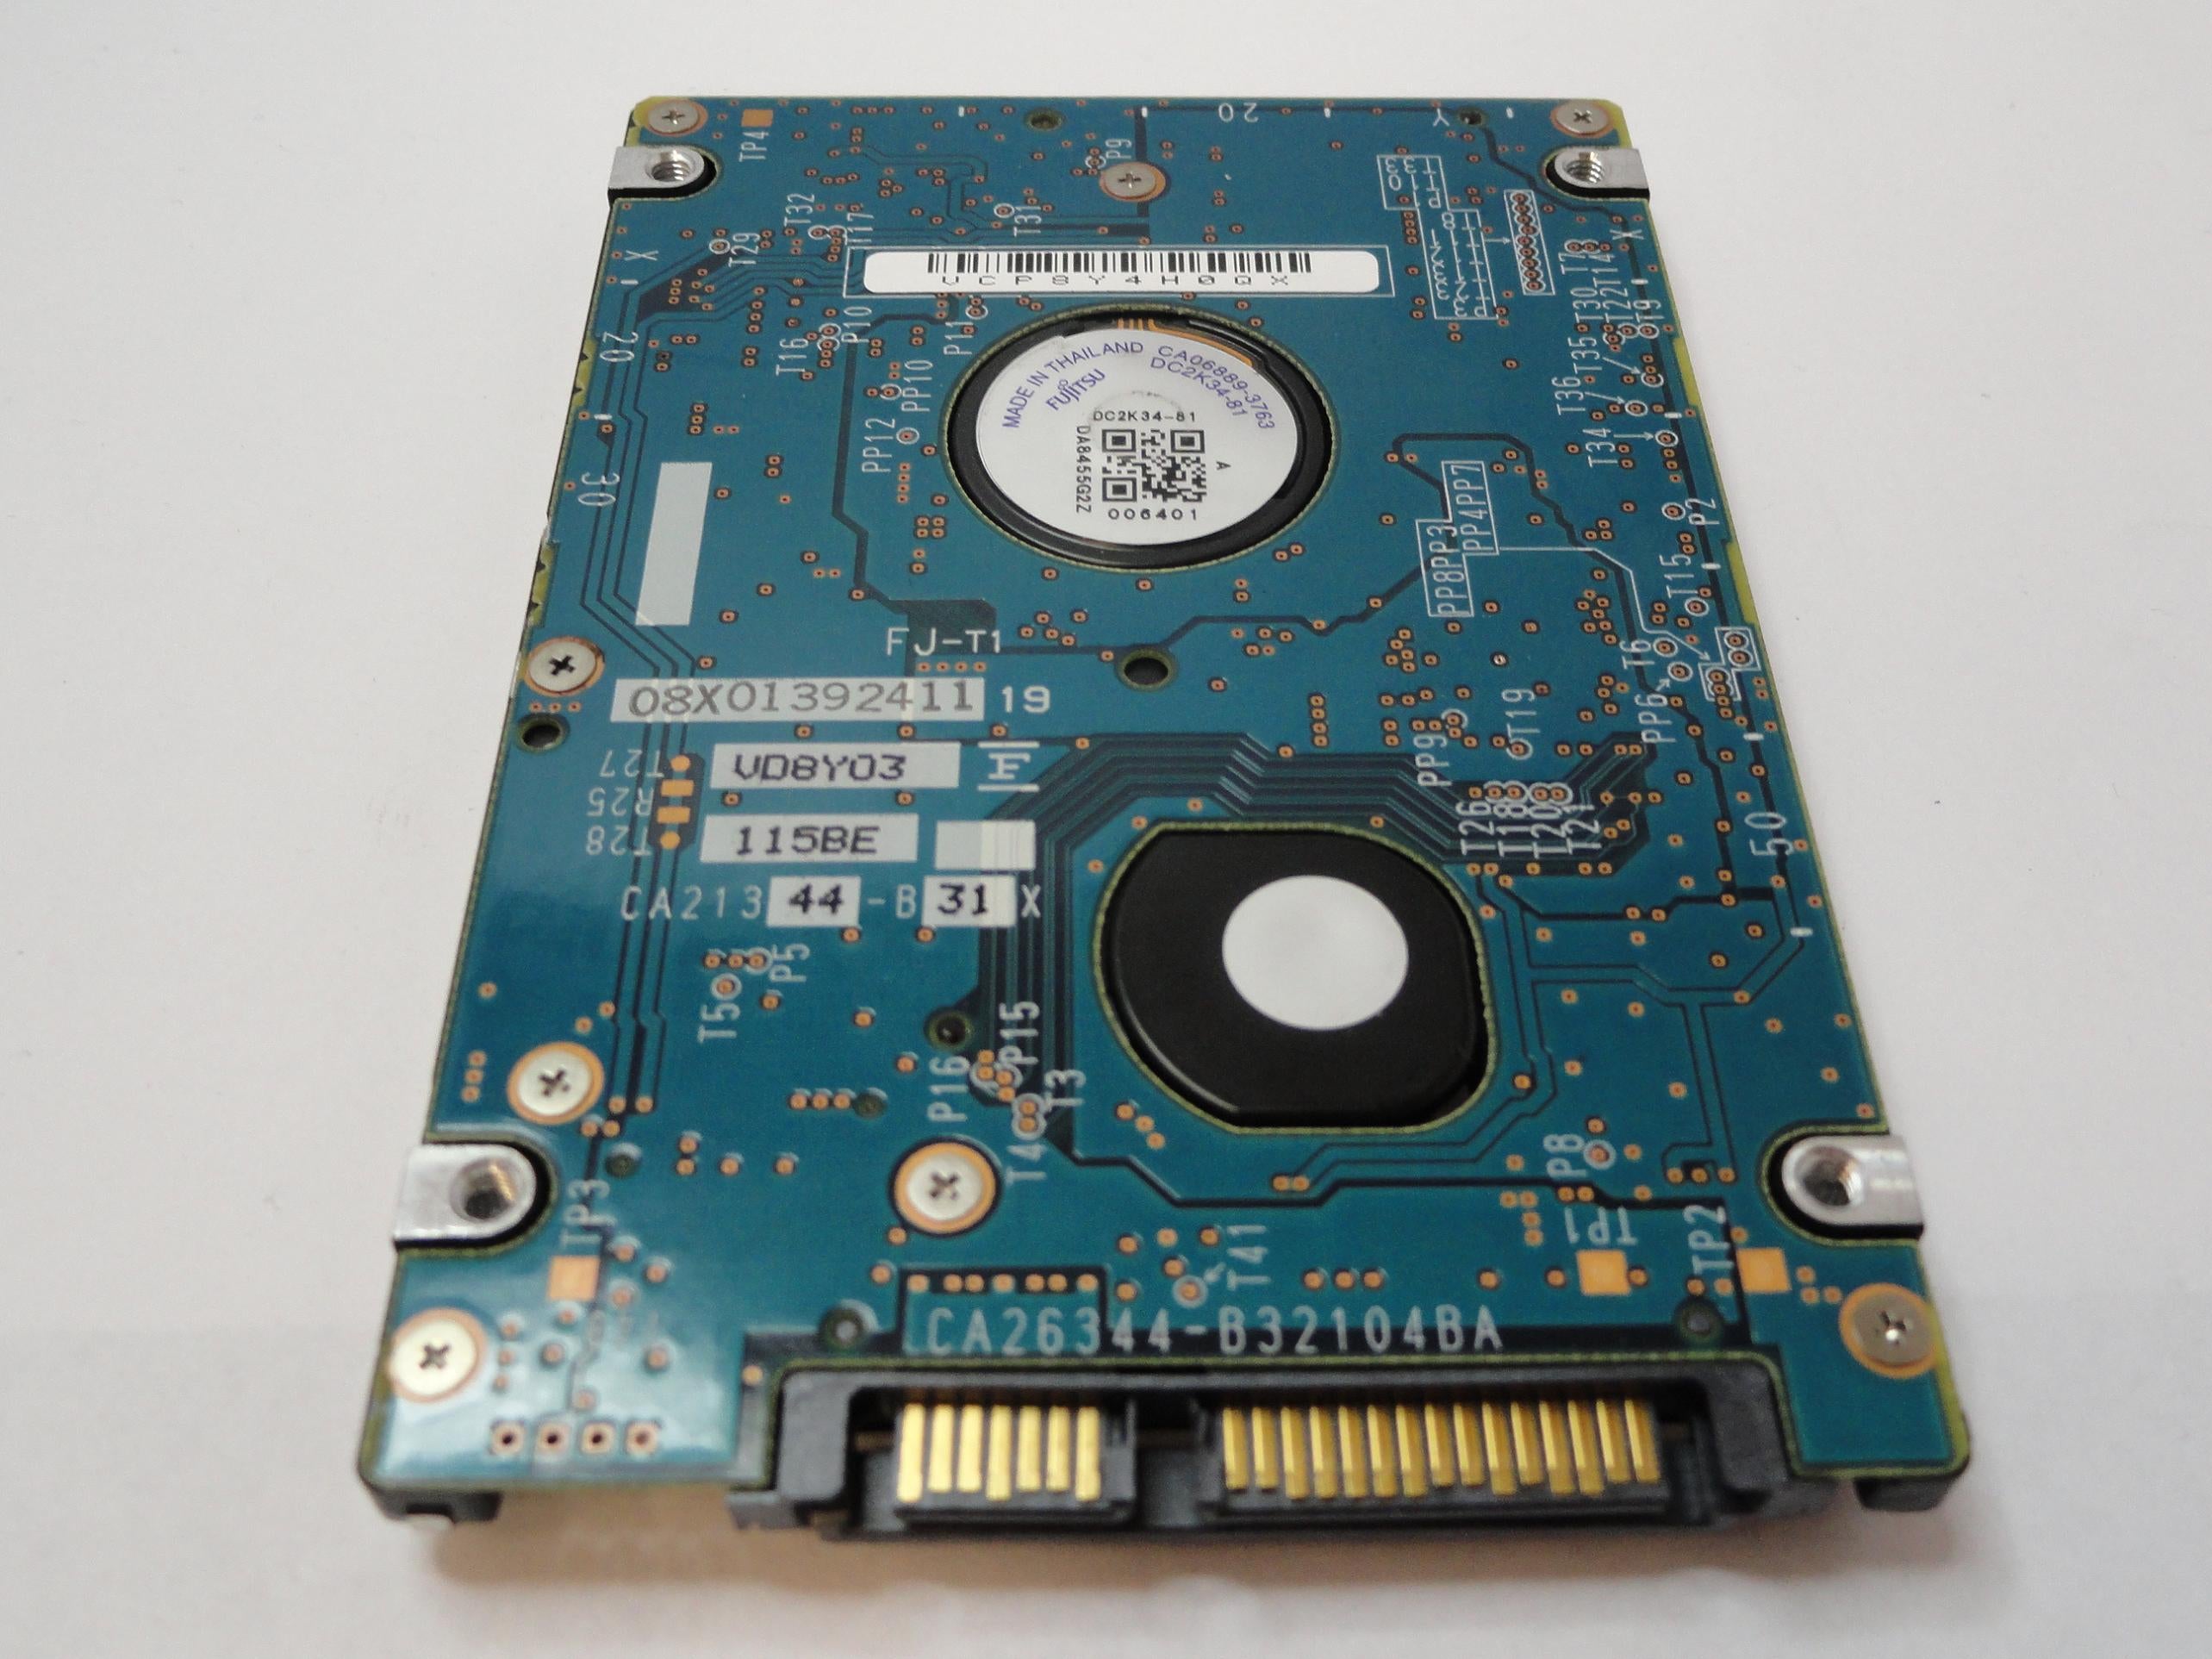 CA06889-B014 - Fujitsu 40Gb SATA 5400rpm 2.5in HDD - Refurbished